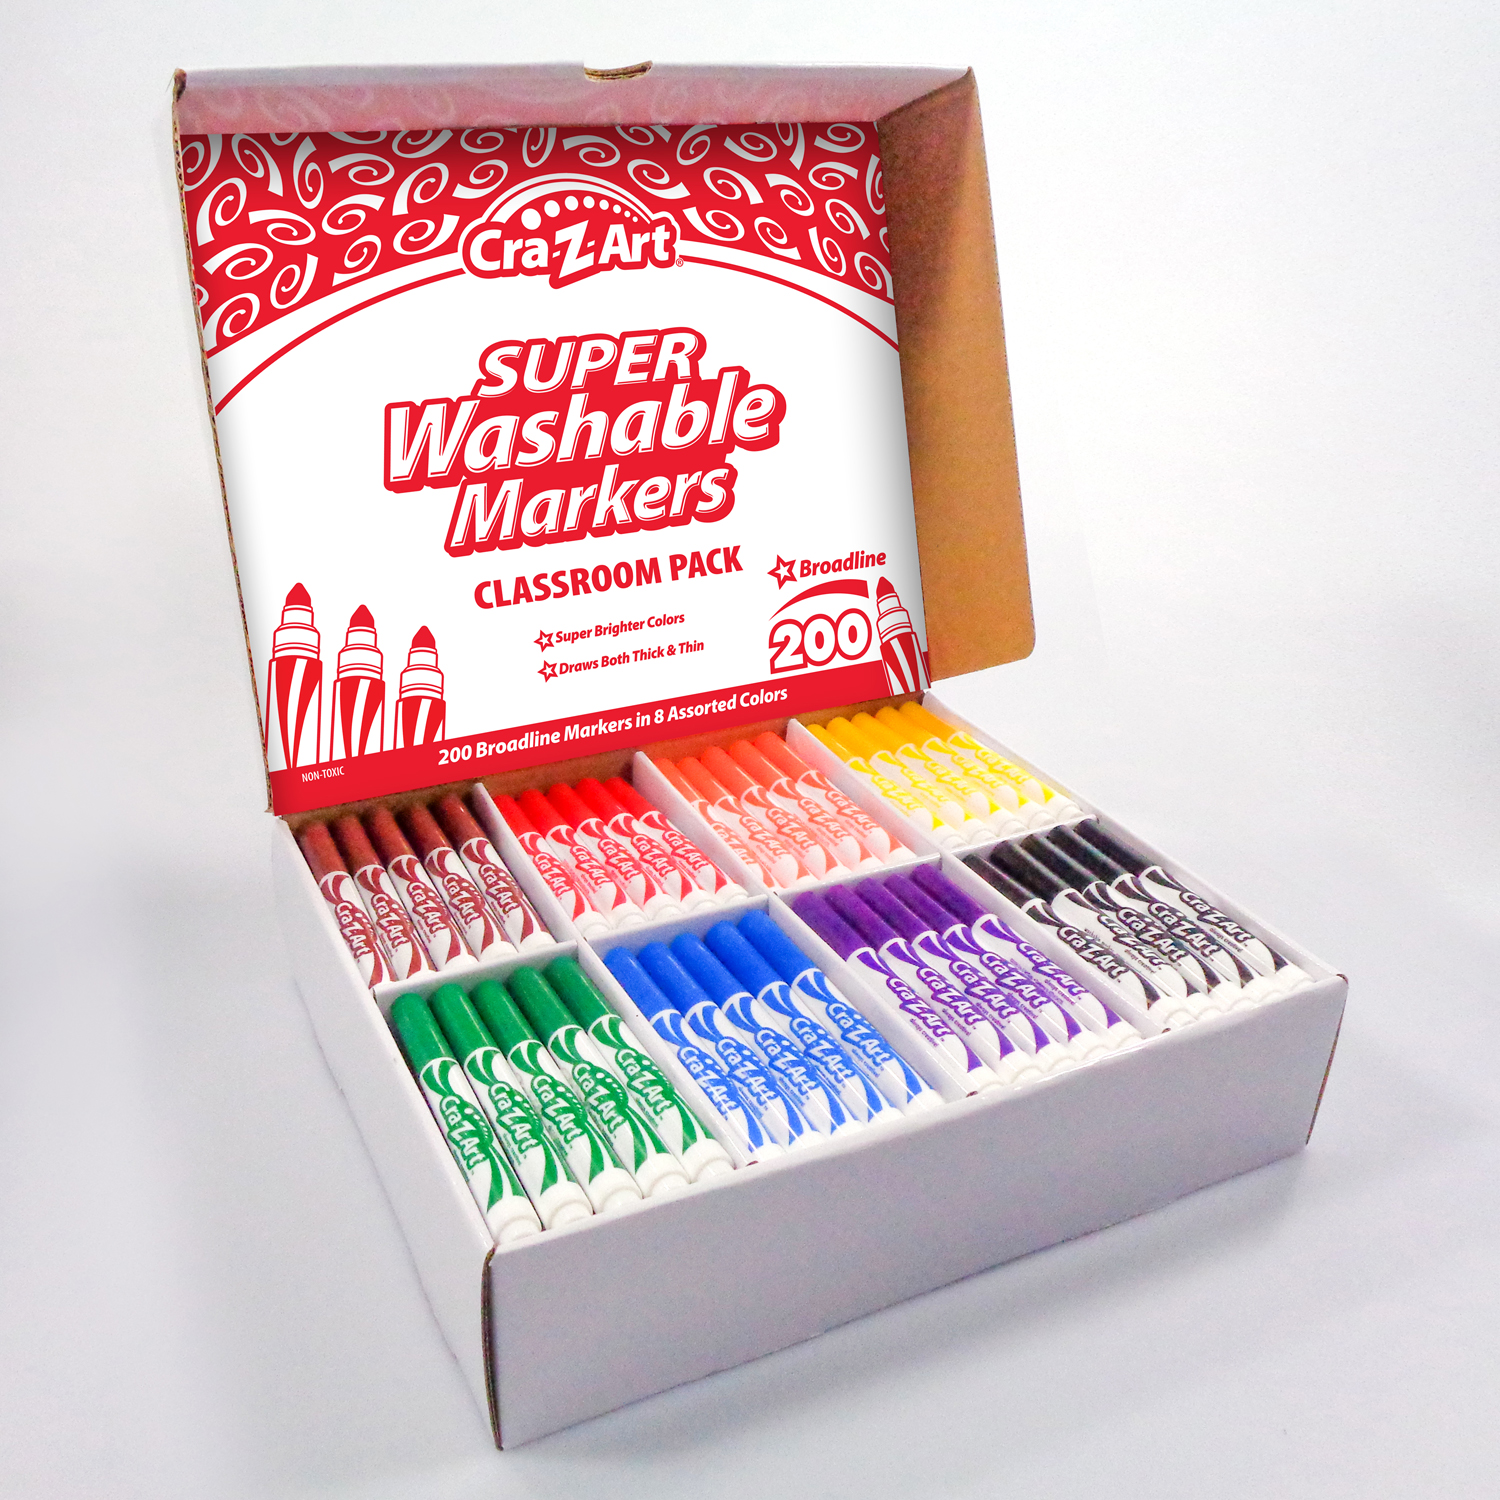 Cra-Z-Art Crayons Assorted Colors 16 Count